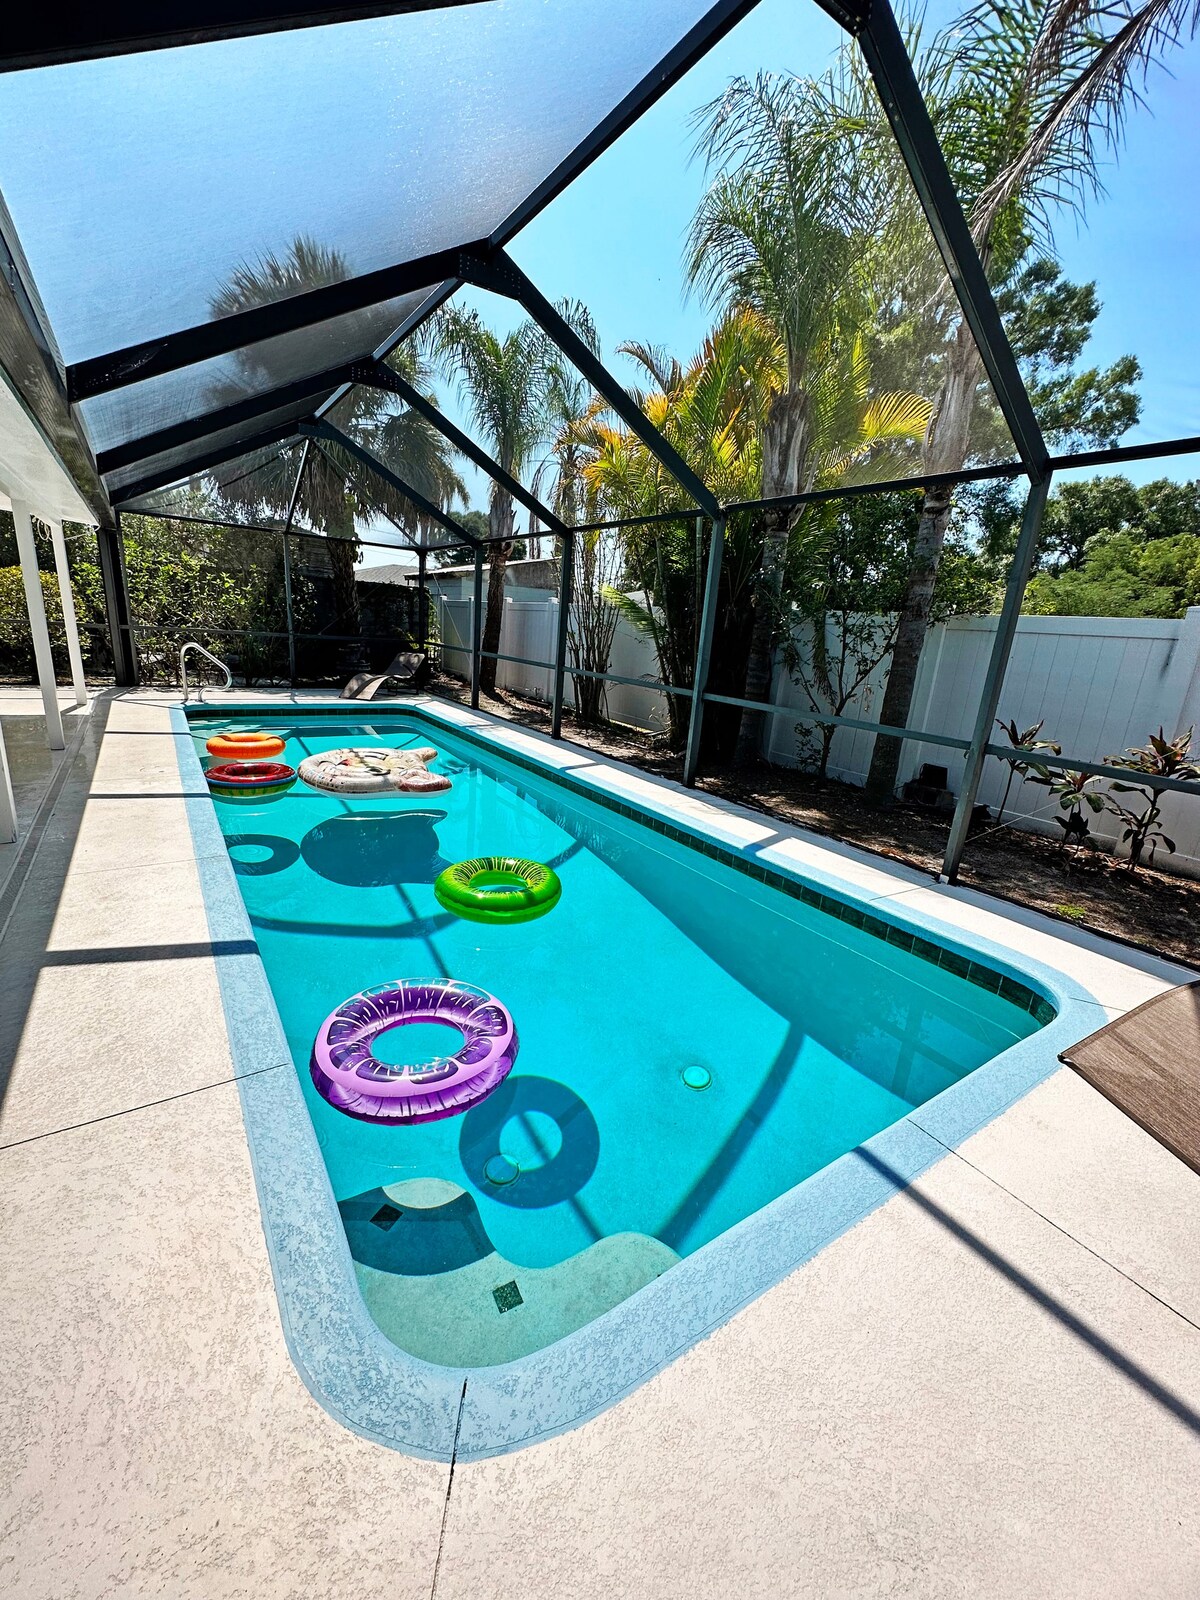 Heated Pool! Paradise in Midtown Tampa 3B2B